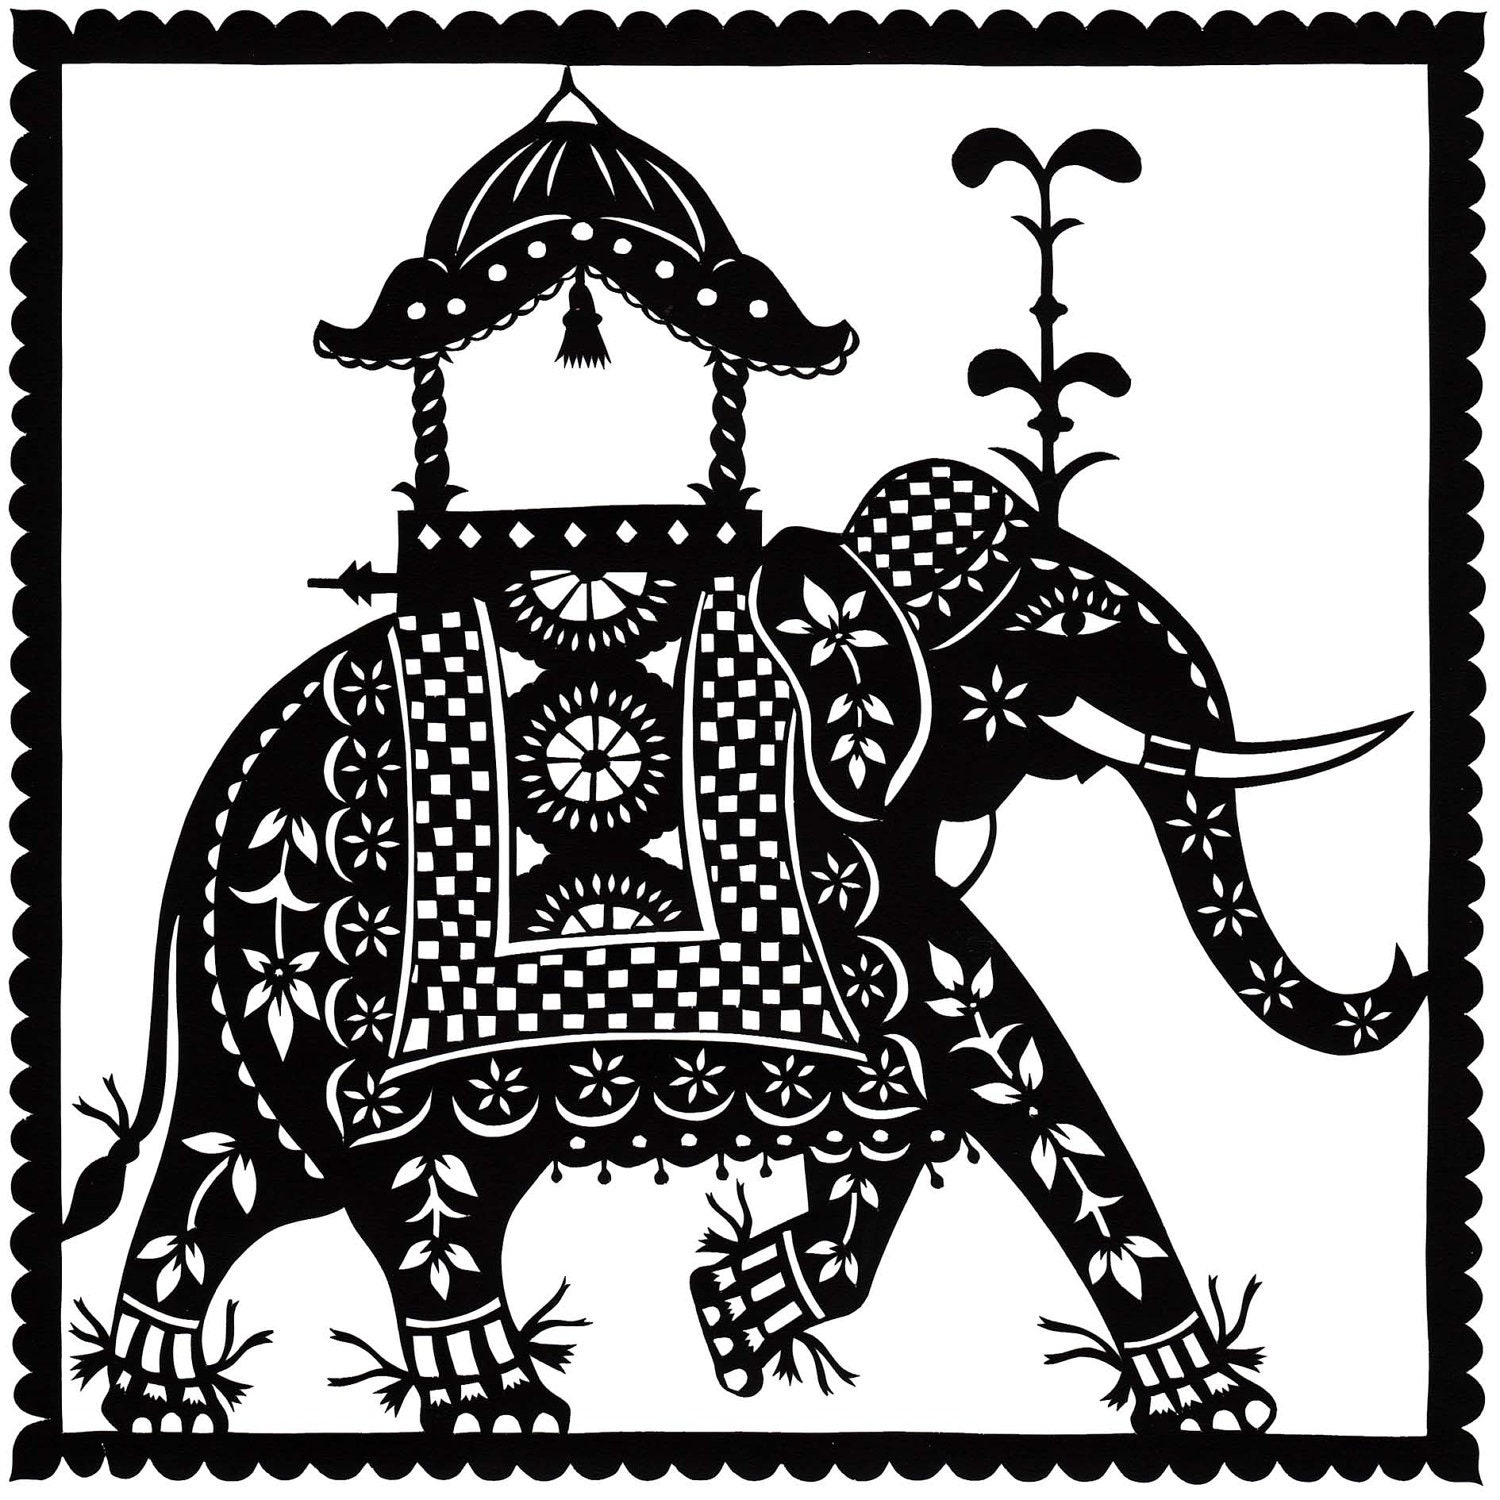 Indian Elephant PRINT 16cm x 16cm by FolkArtPapercuts on Etsy